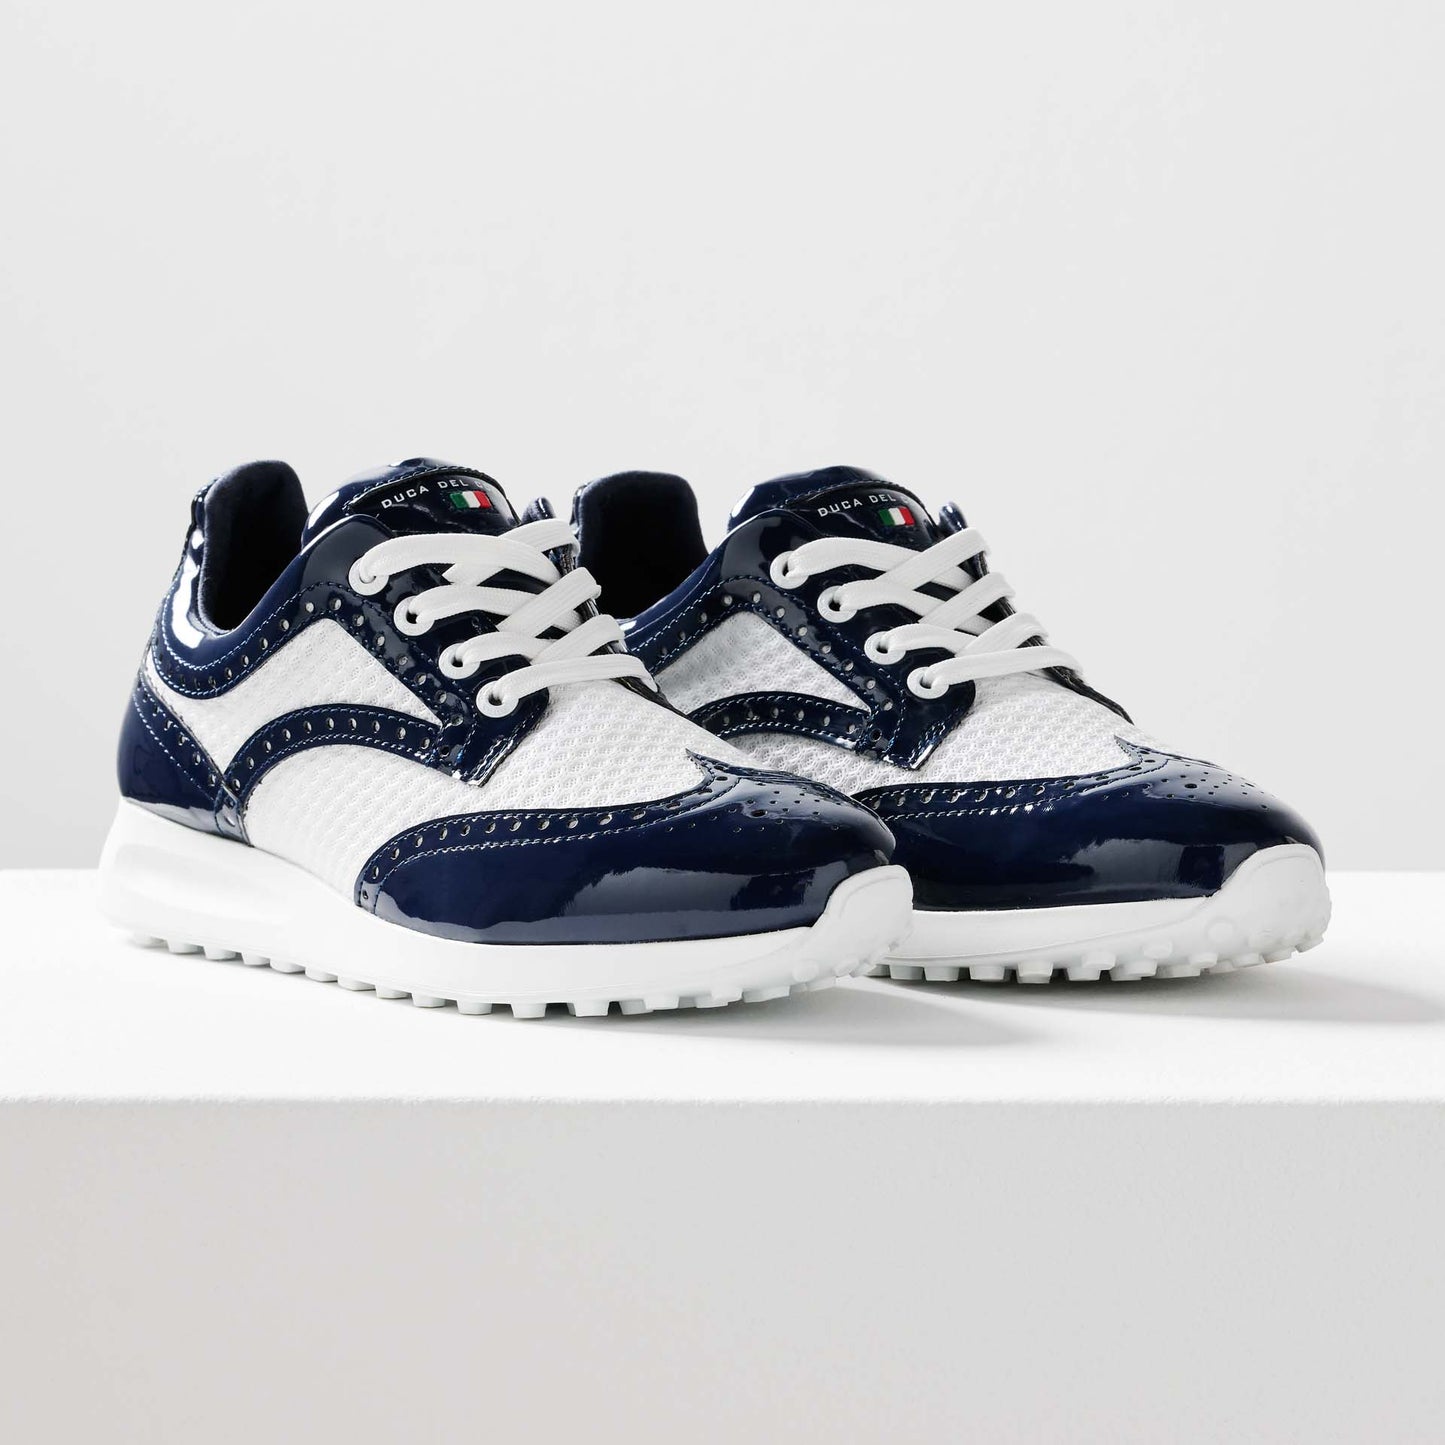 Serena - Zapatos De Golf Mujer Azul Marino/Blanco